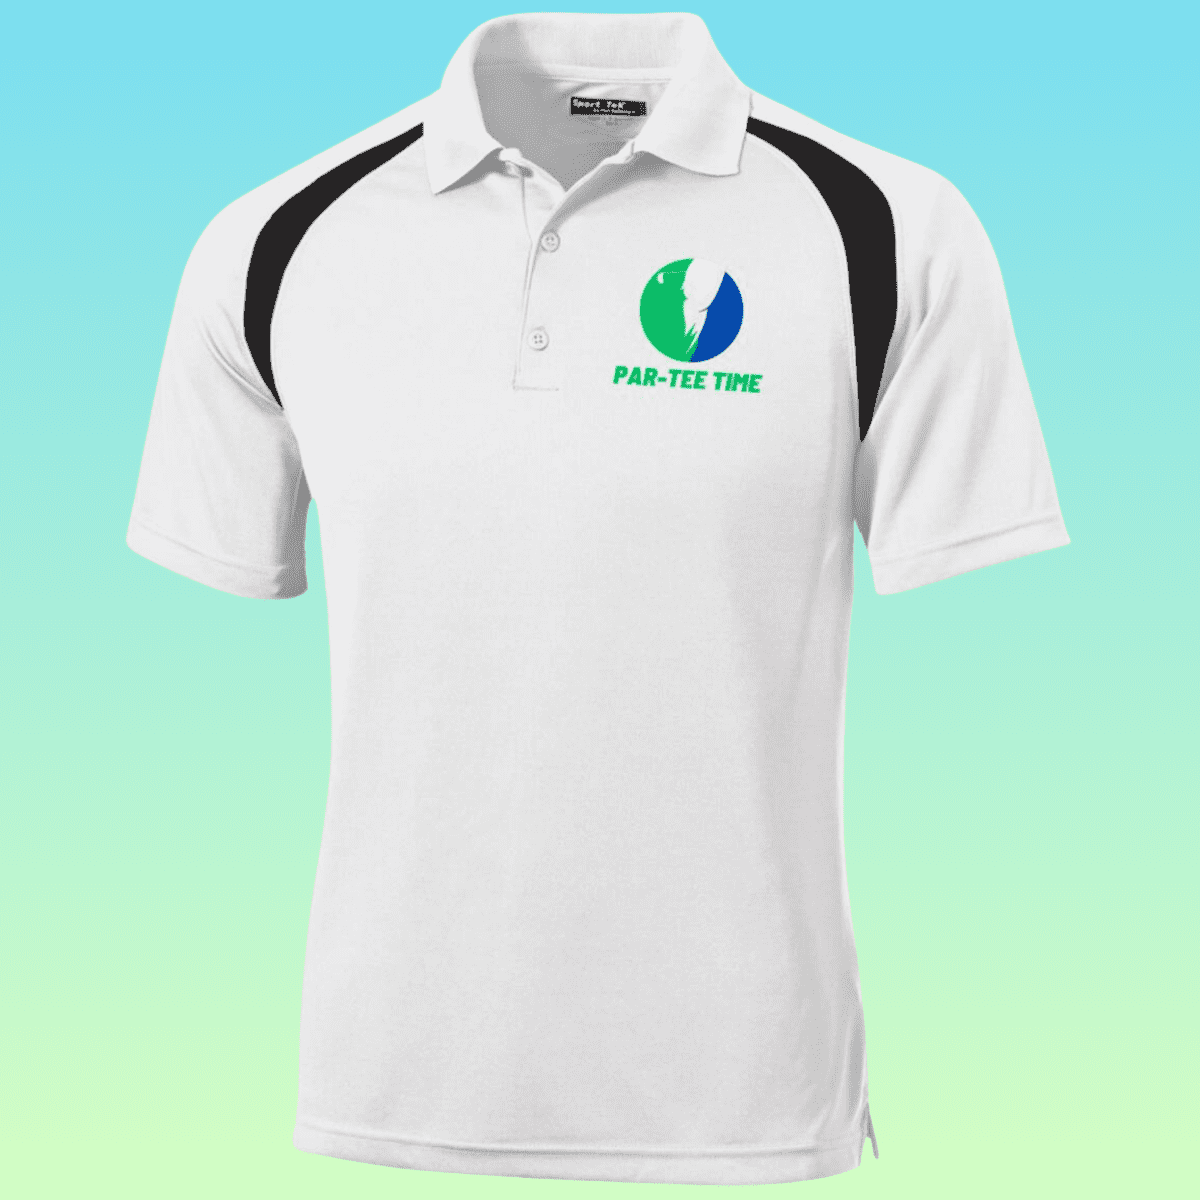 Men's White and Black Golf Par-tee Time Moisture-Wicking Polo Shirt